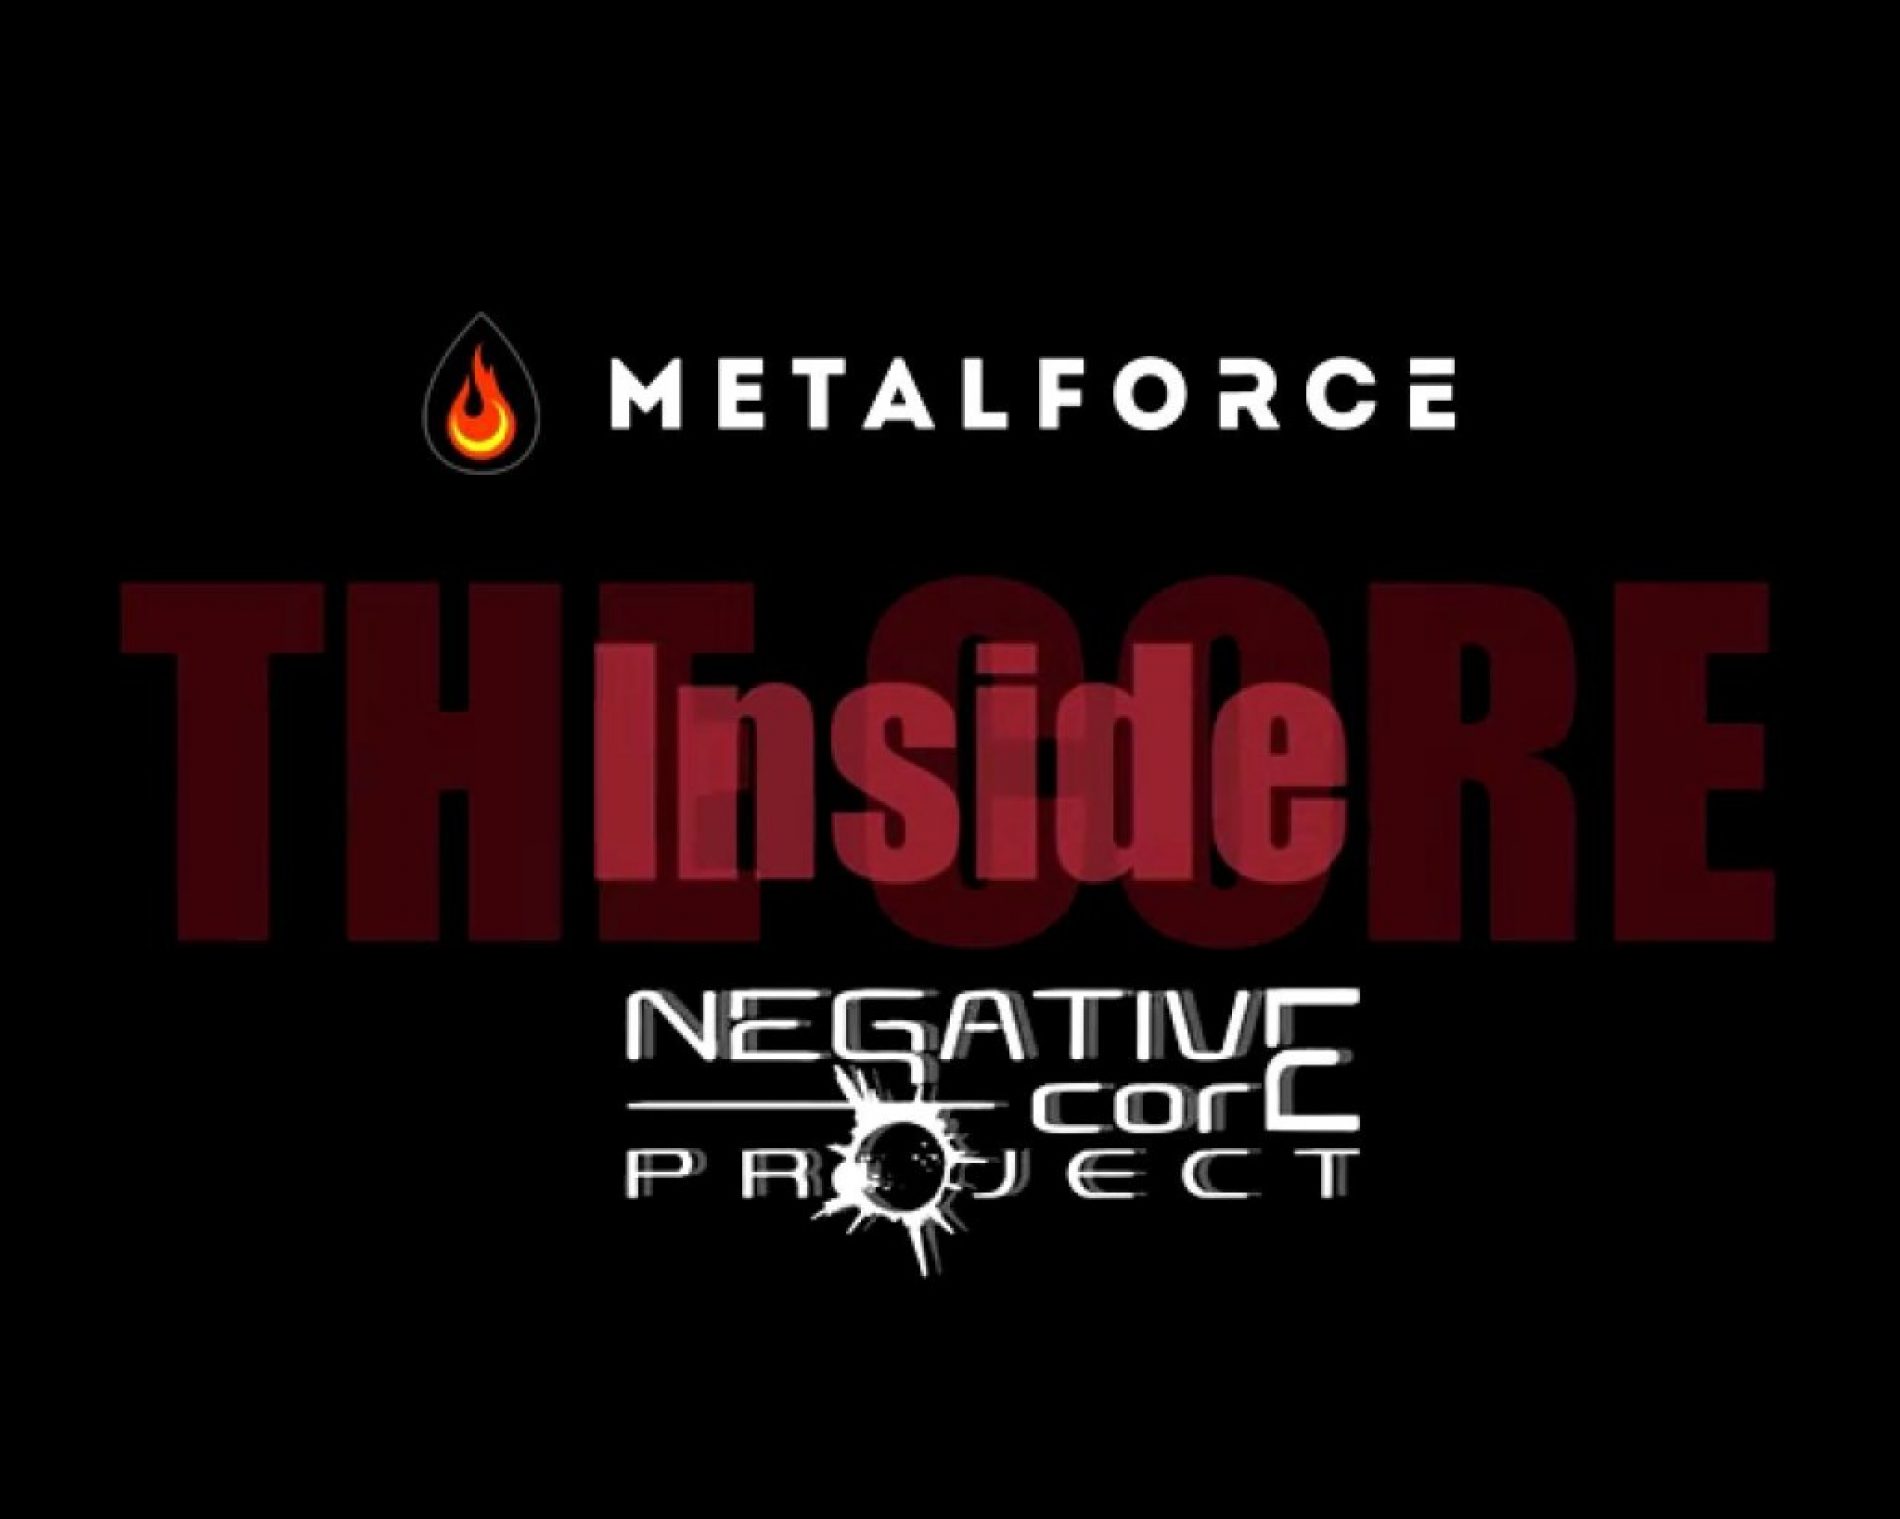 INSIDE THE CORE #5: Negative Core Project (INTERVIU VIDEO METALFORCE)